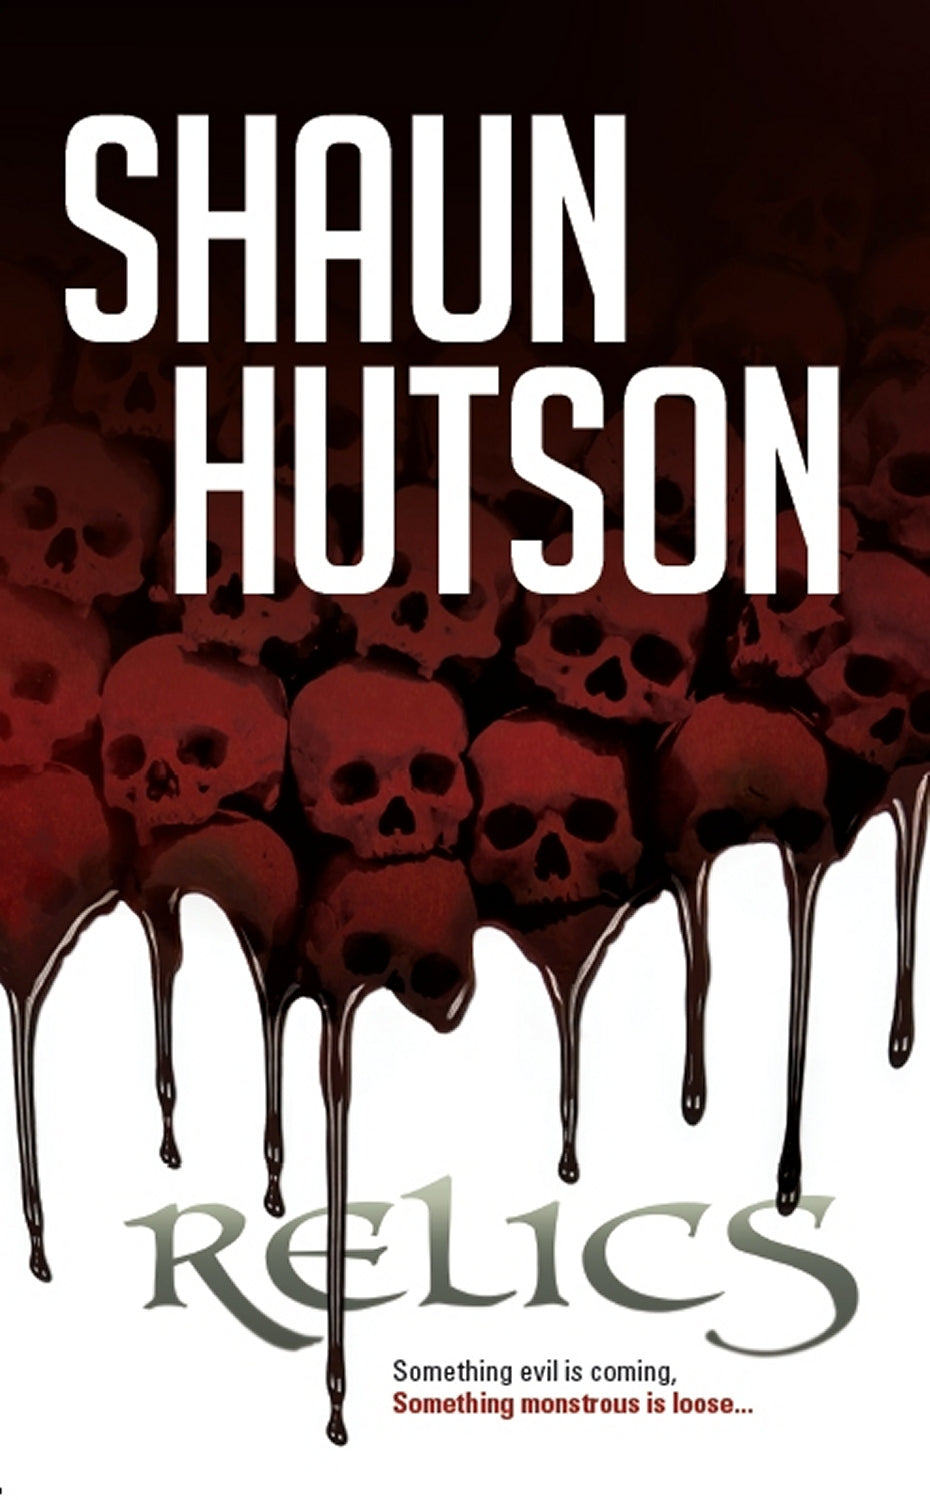 Relics by horror novelist, Shaun Hutson